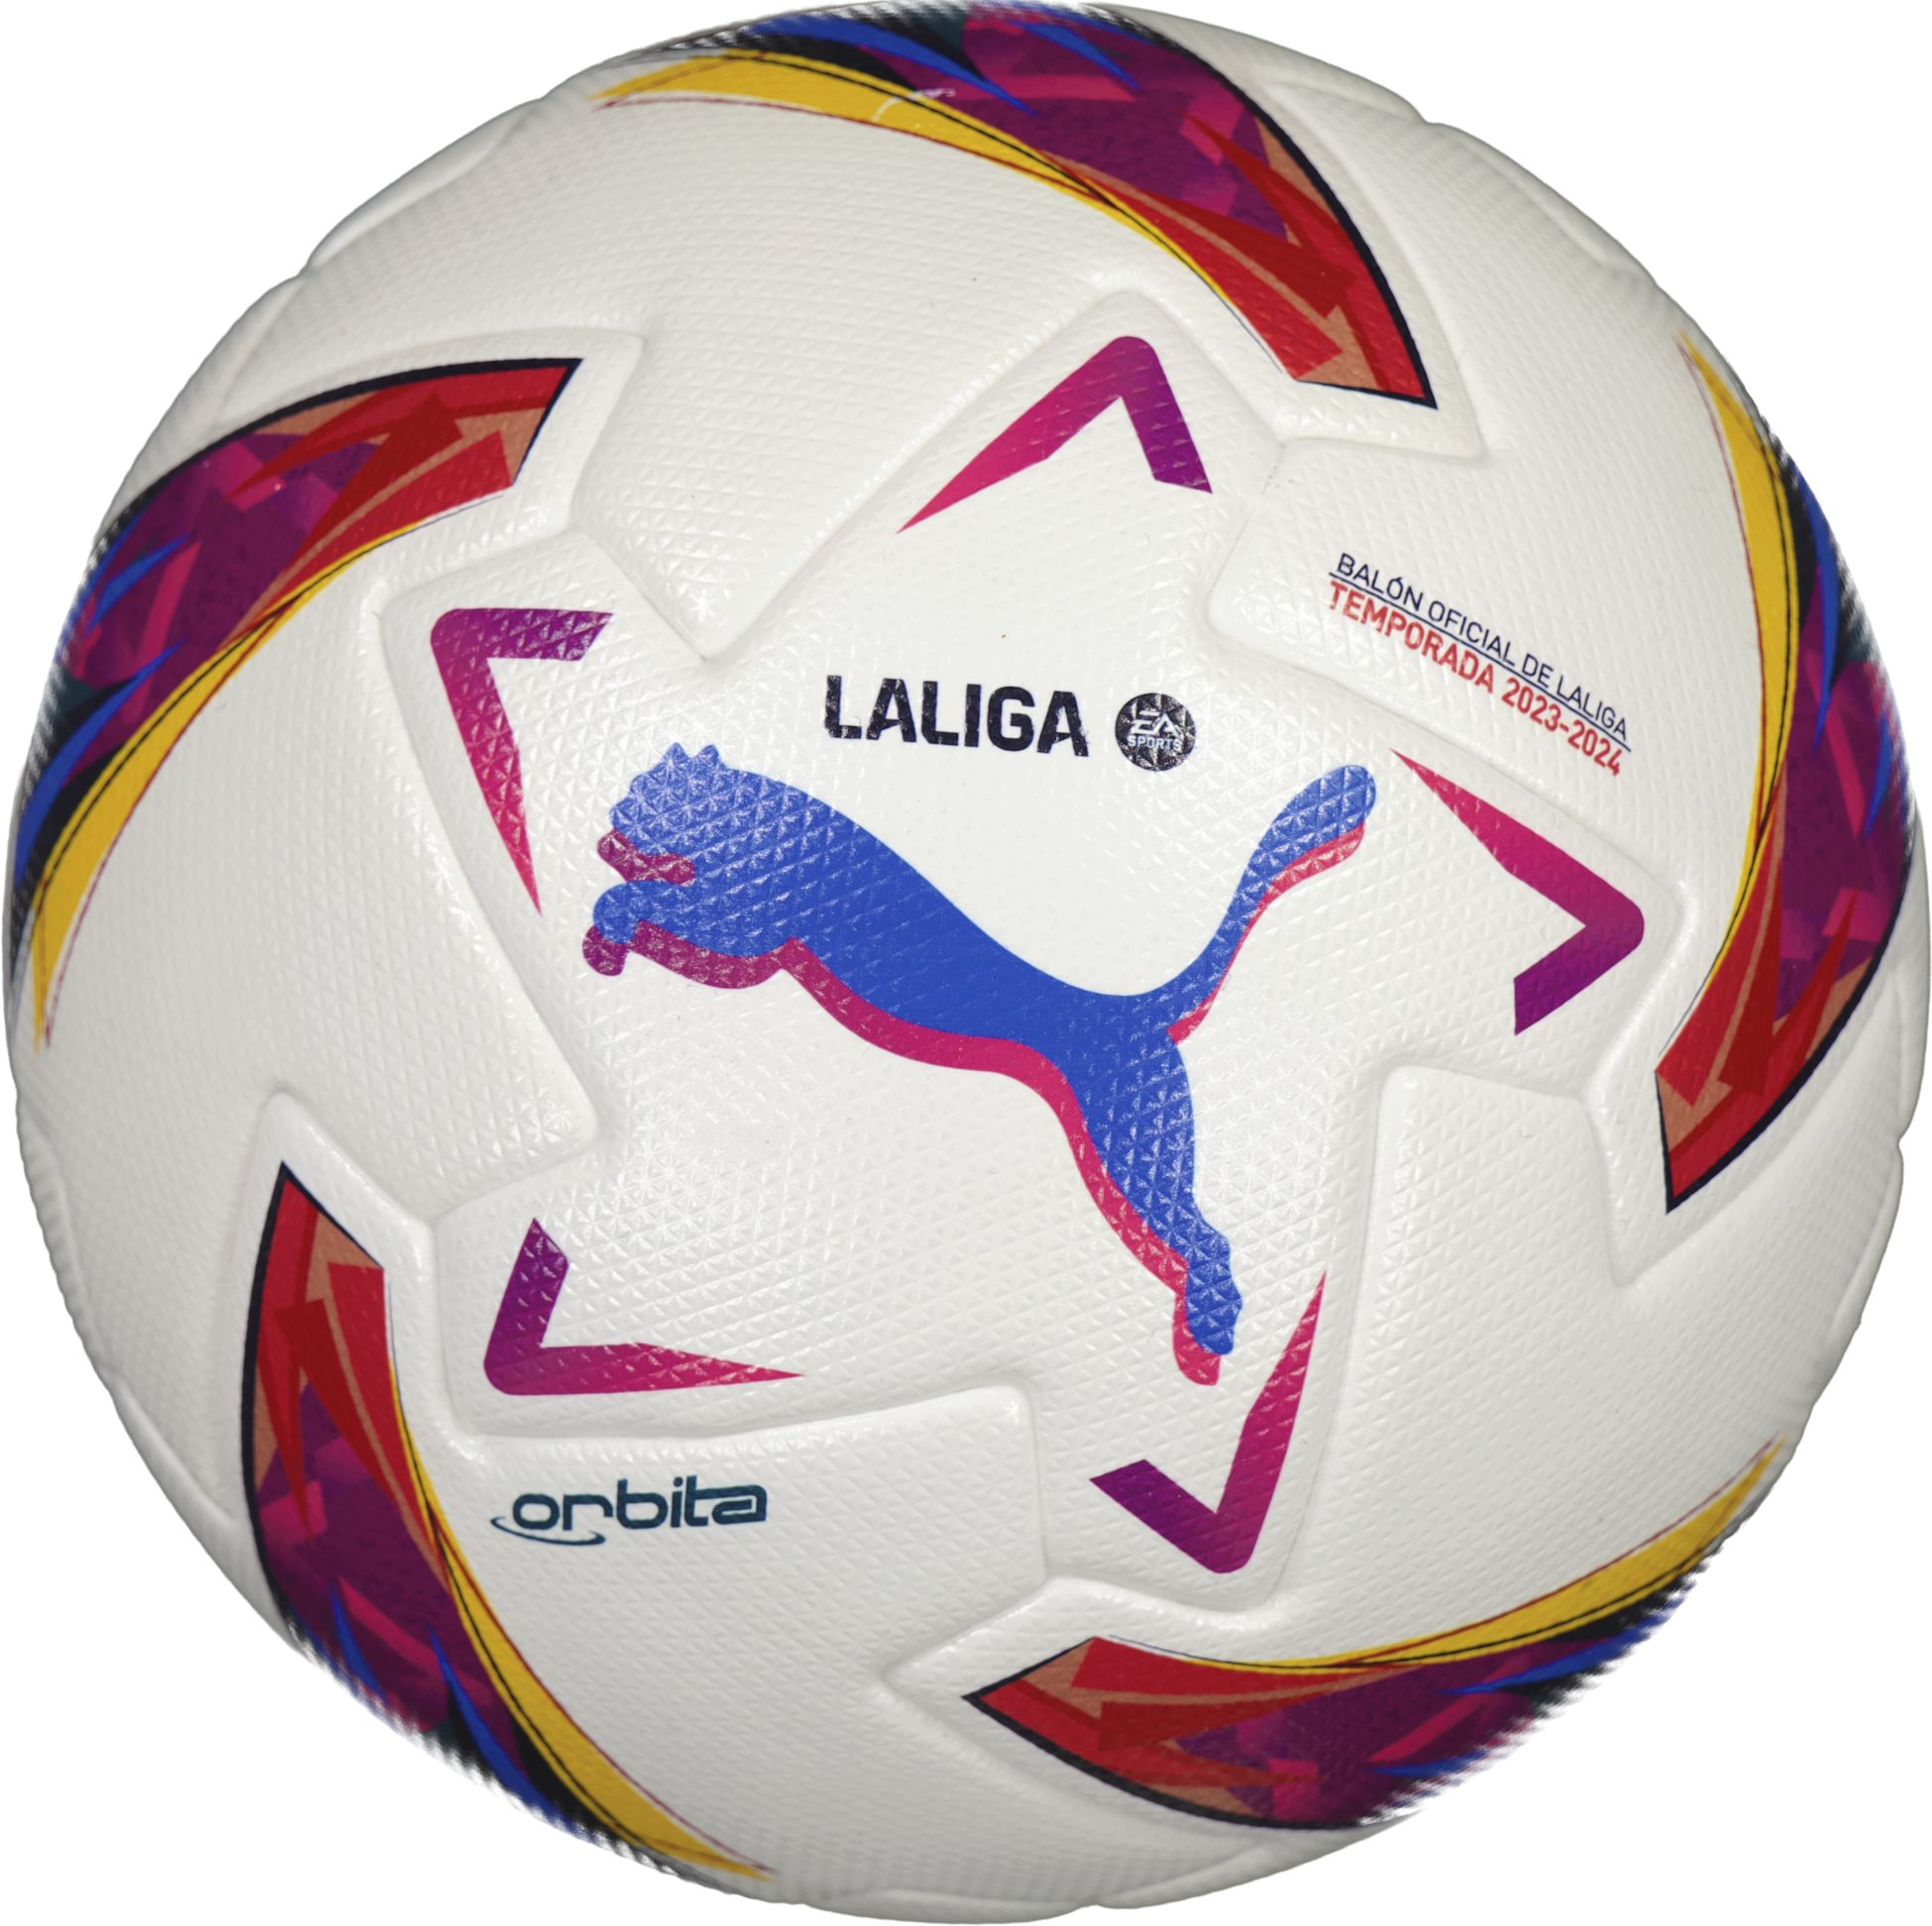 PUMA, PUMA Orbita LaLiga 1 (FIFA Quality Pro)